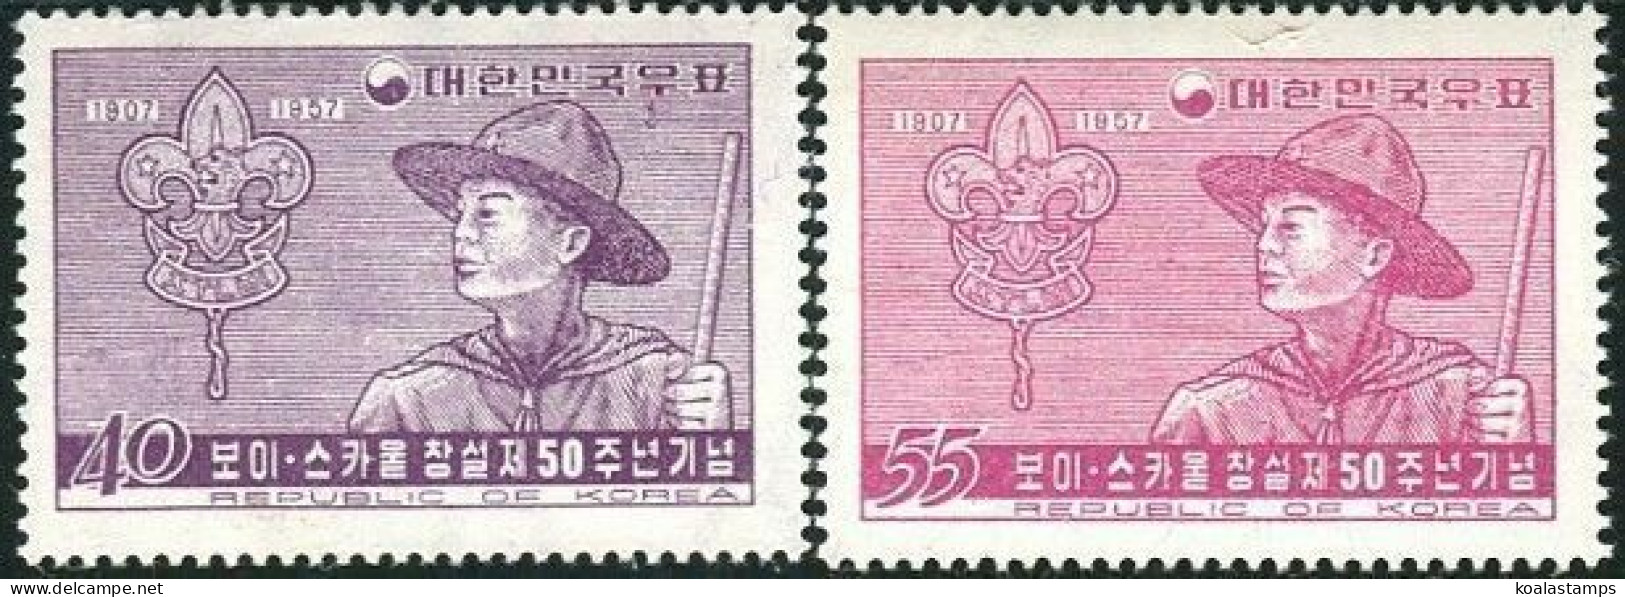 Korea South 1957 SG293 Scout And Badge Set MNH - Korea (Zuid)